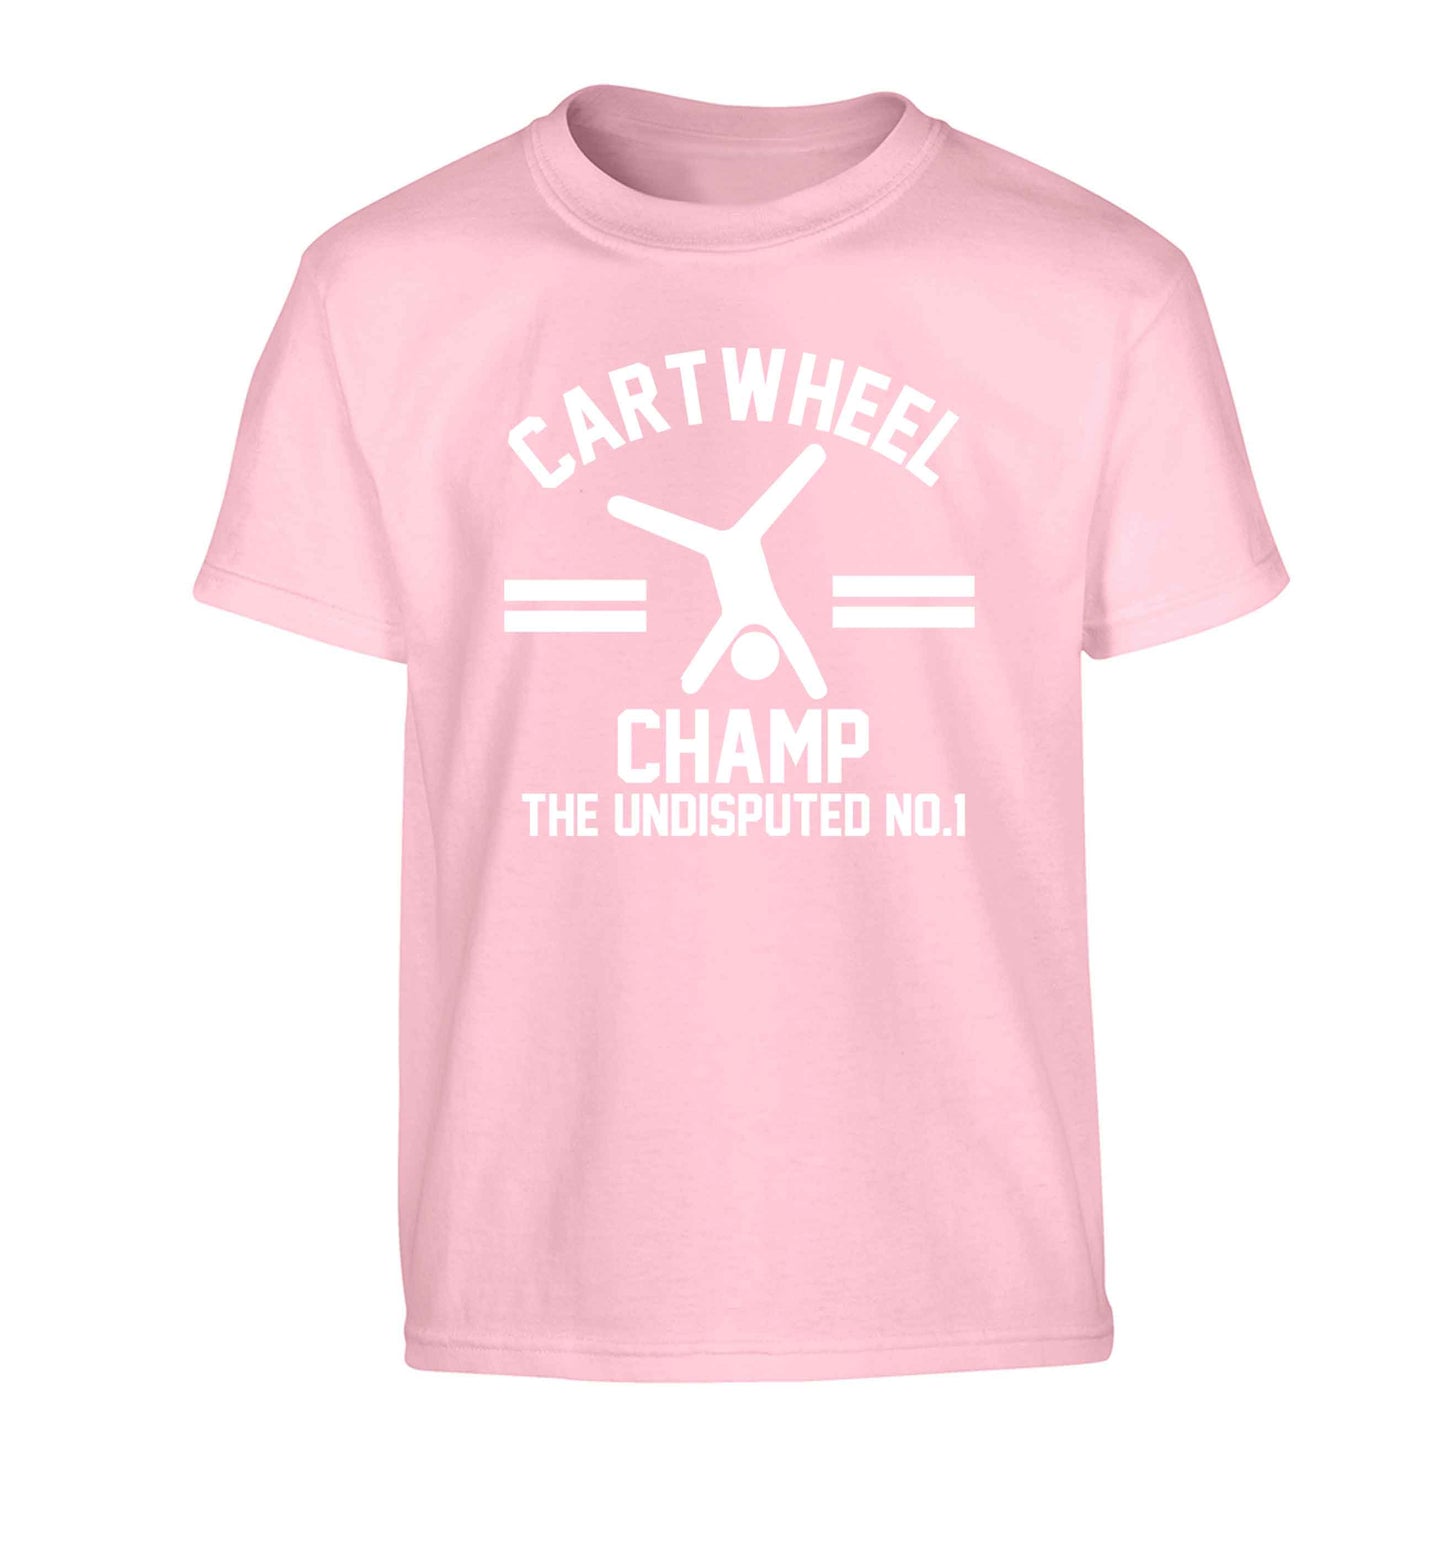 Undisputed cartwheel championship no.1  Children's light pink Tshirt 12-13 Years